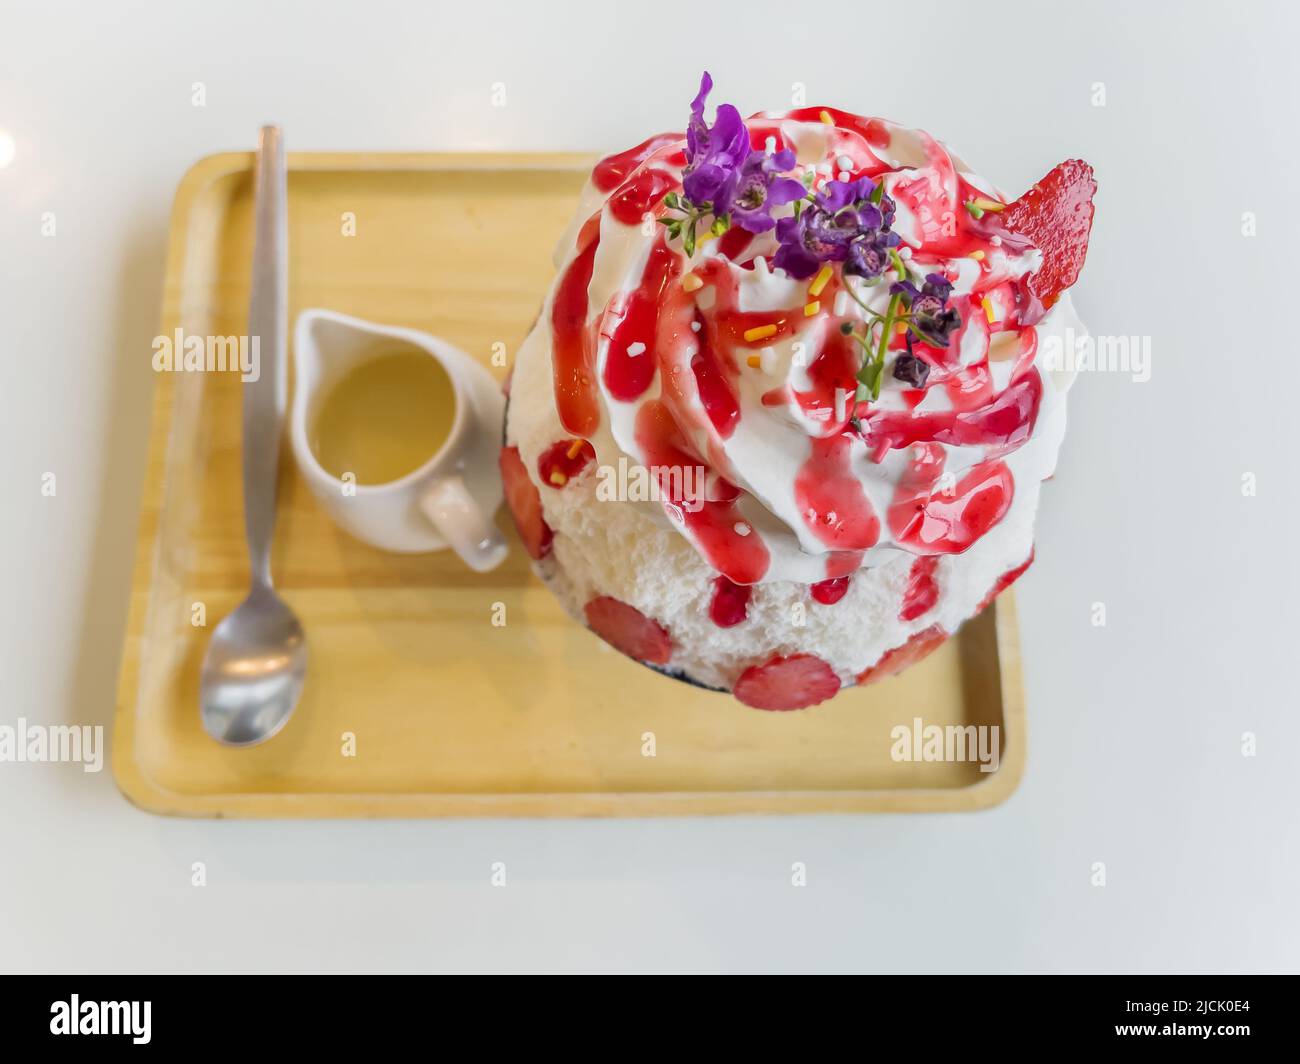 shaved ice or strawberry bingsu fresh milk flavor Stock Photo